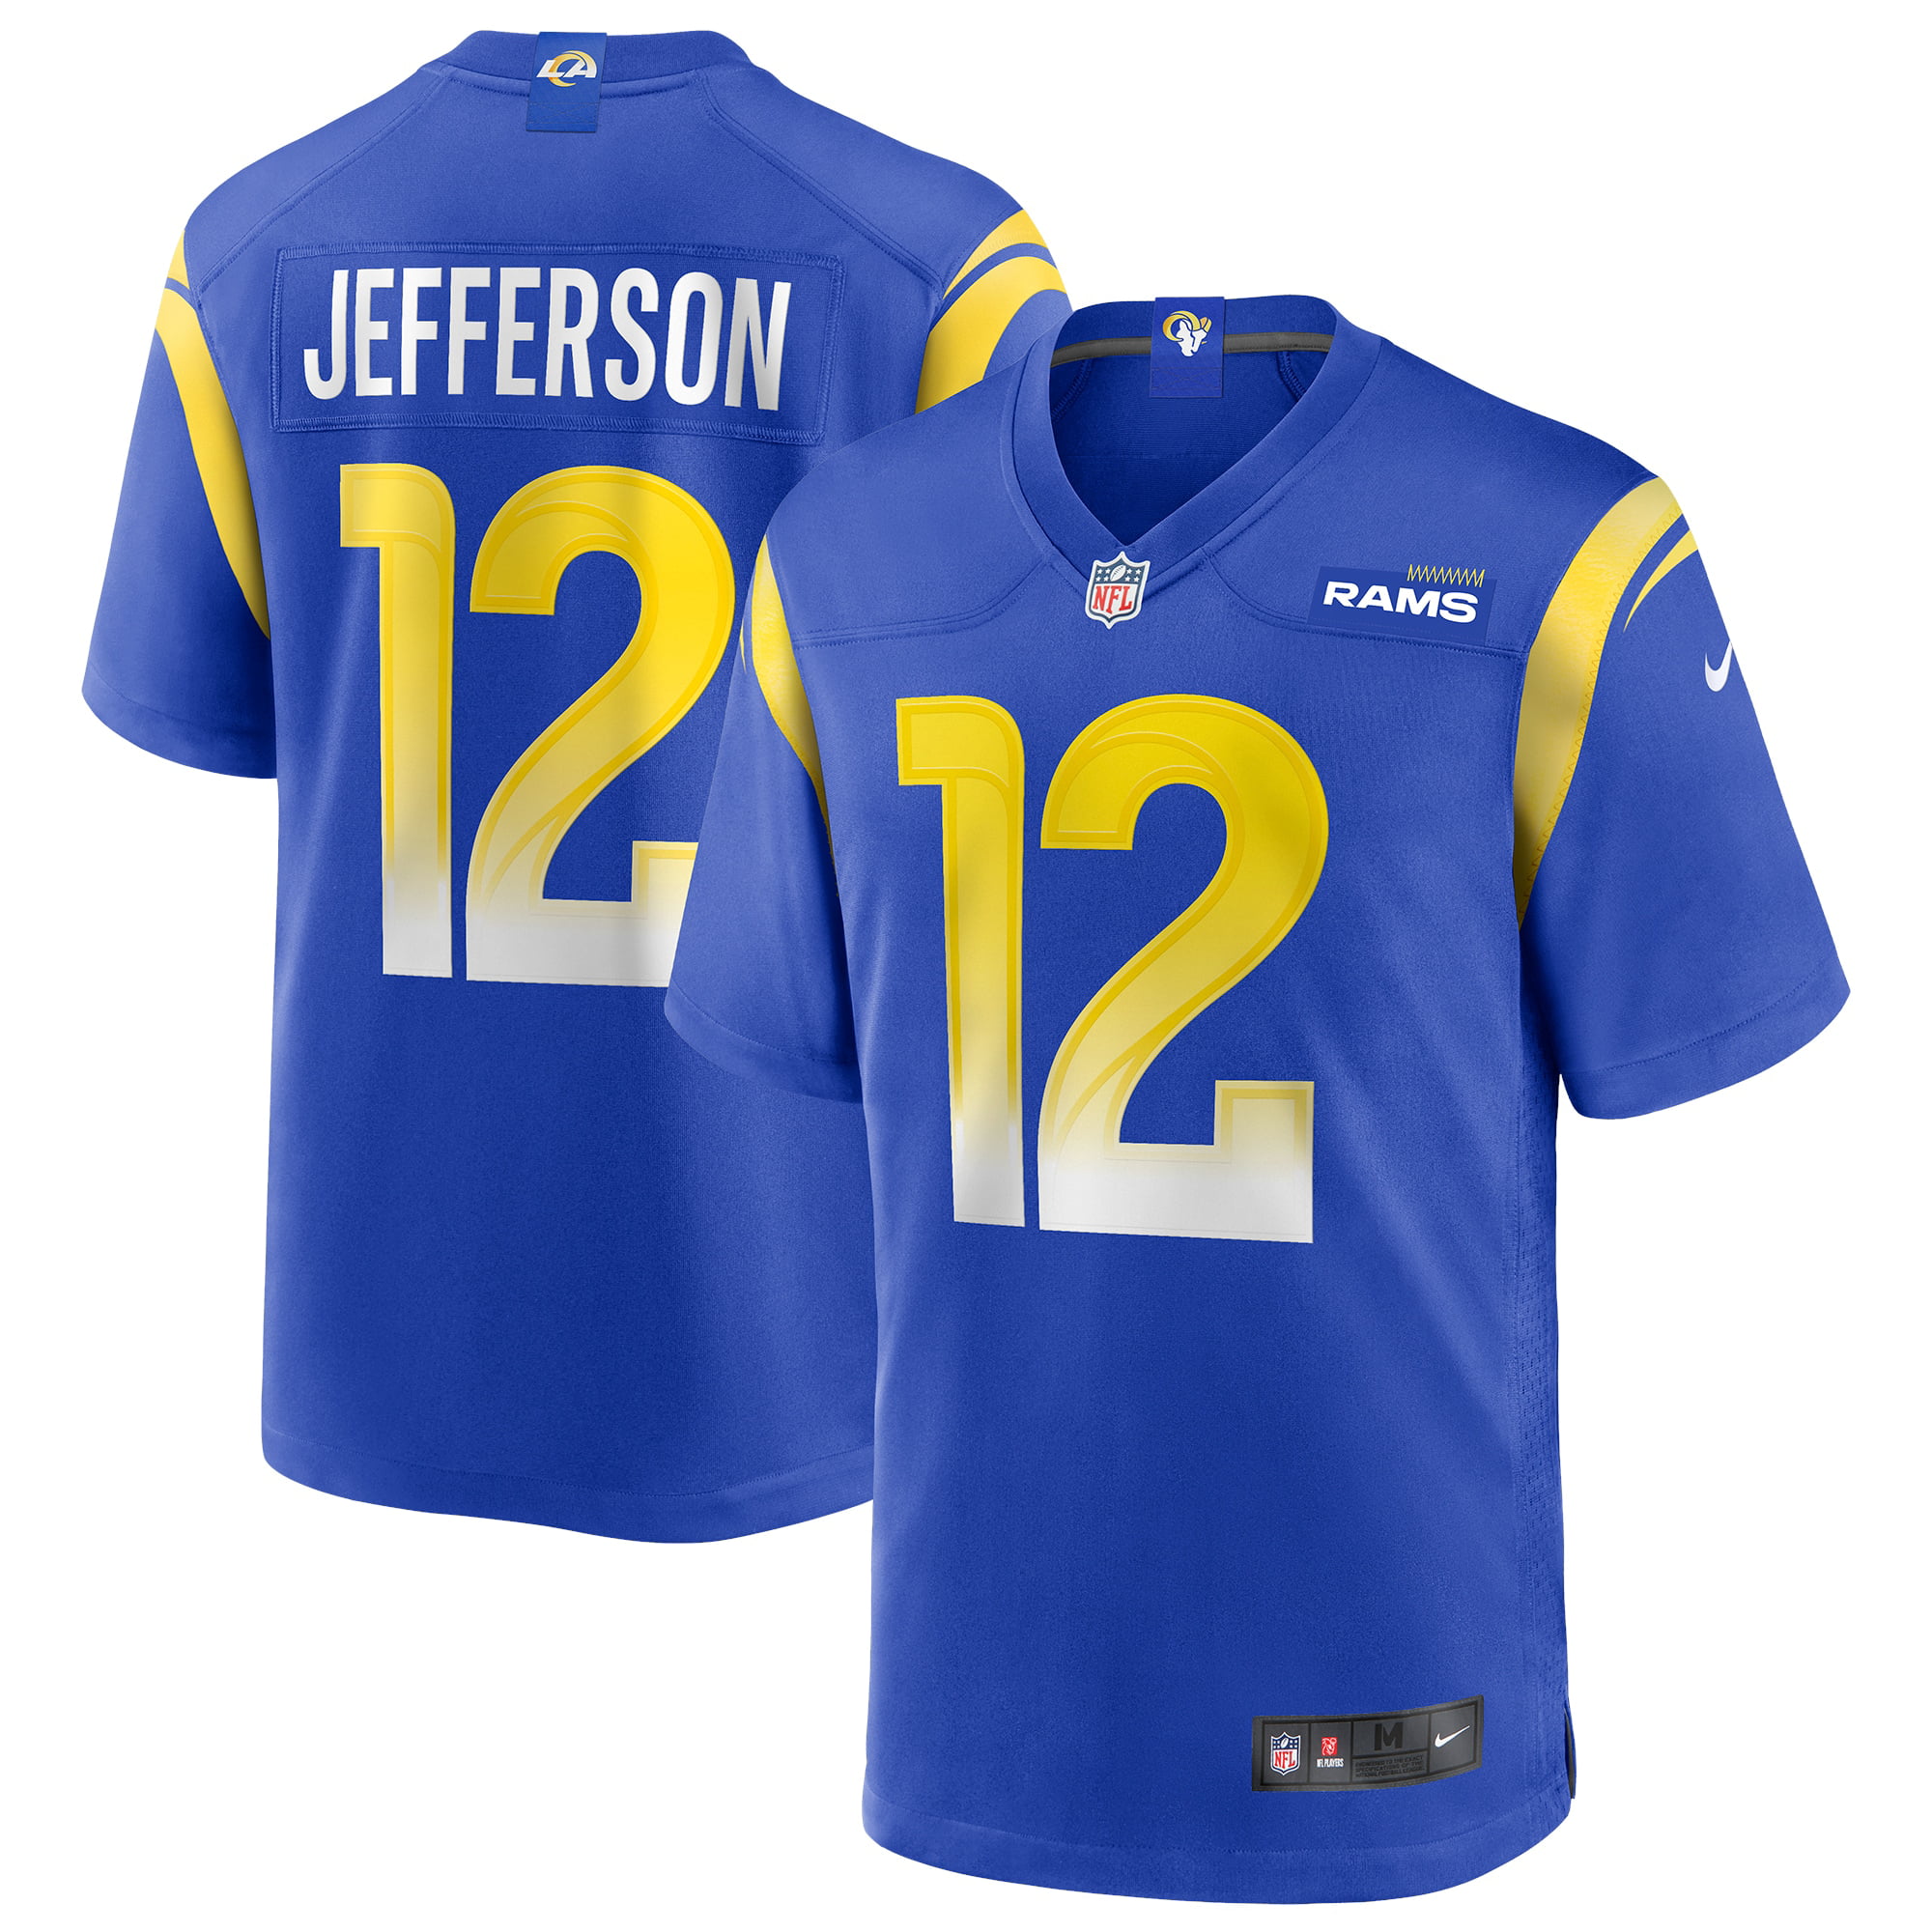 Van Jefferson î€€Losî€ î€€Angelesî€ î€€Ramsî€ Nike 2020 NFL Draft Pick Game î€€Jerseyî€ ...